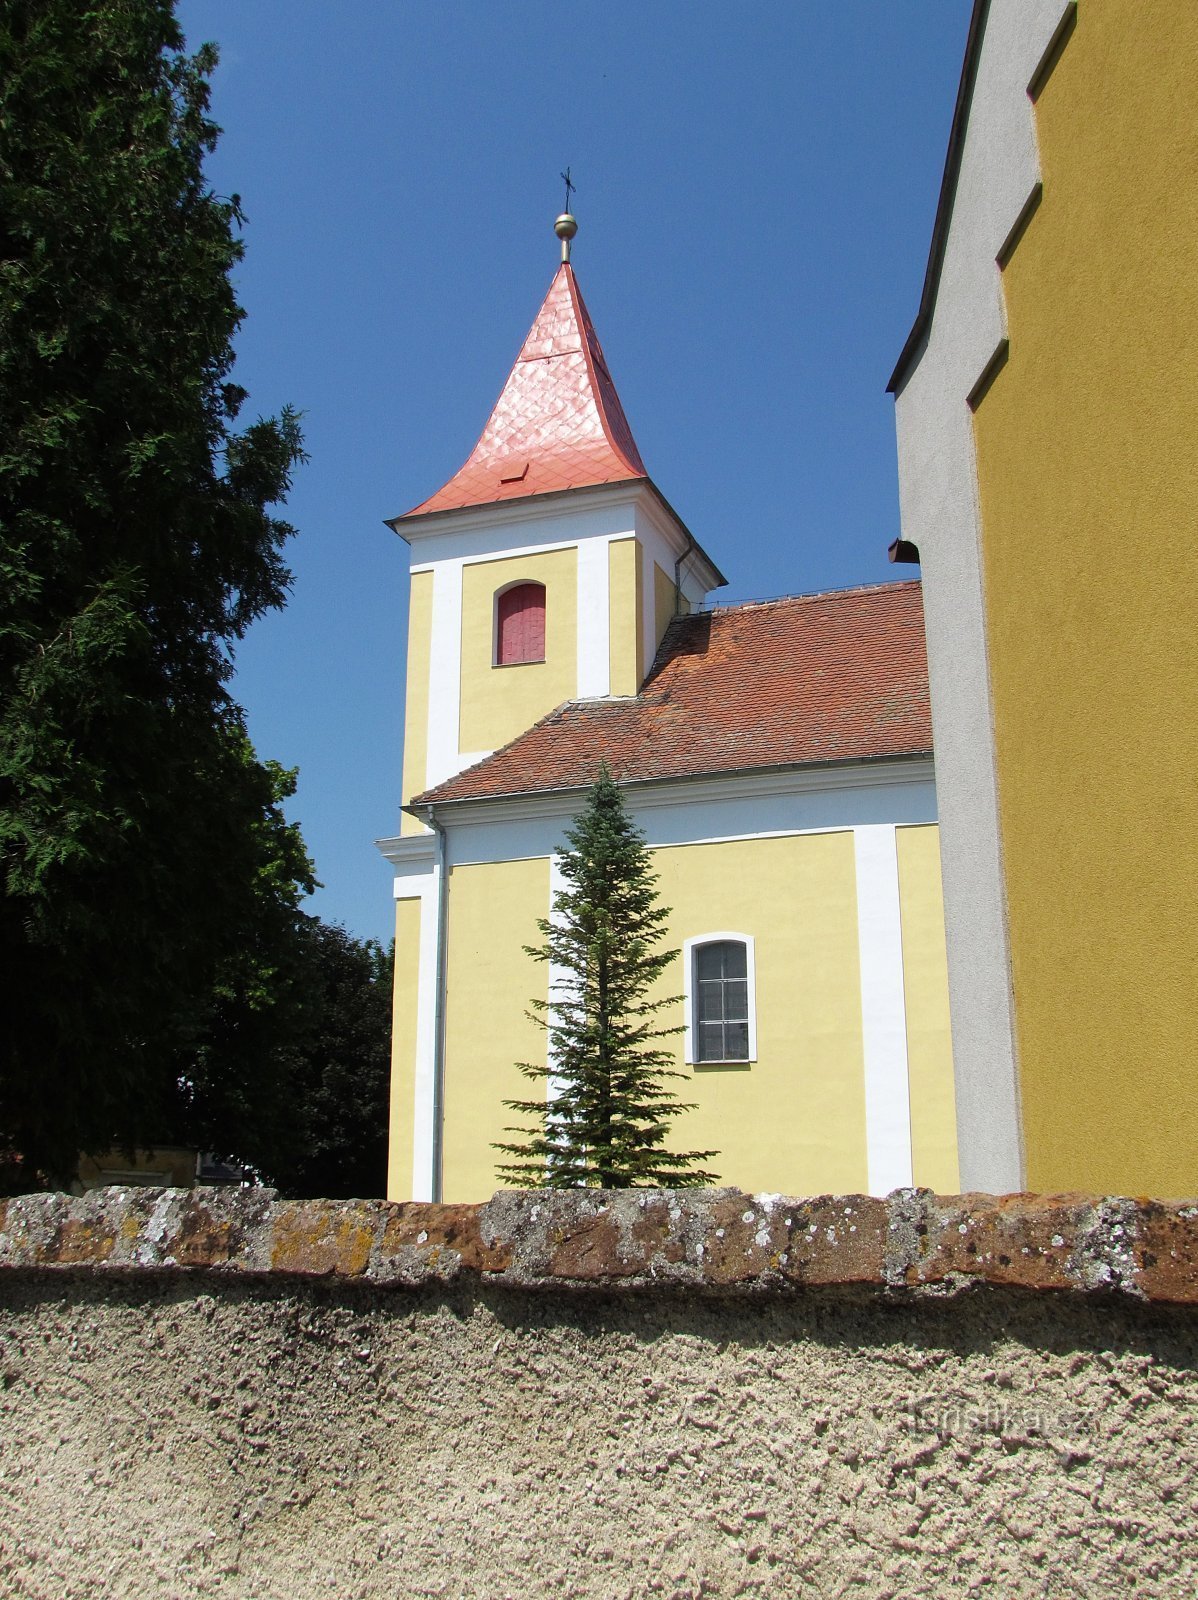 Tovačovský crkva sv. Jurja